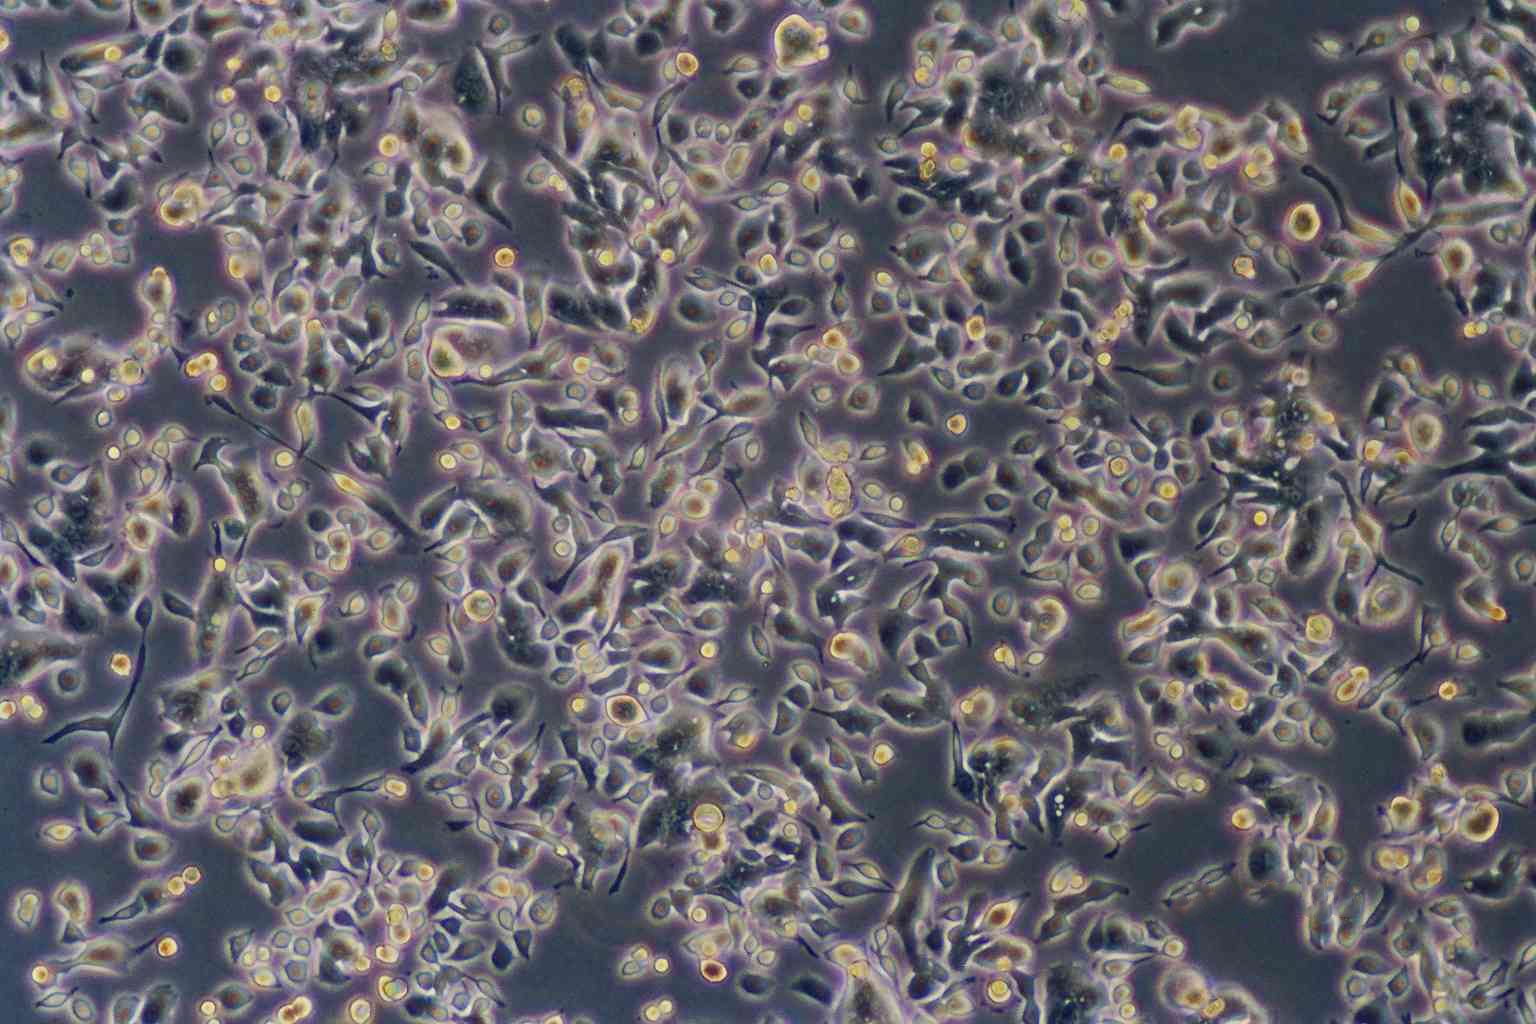 SNU-878 Cells|人肝癌可传代细胞系,SNU-878 Cells